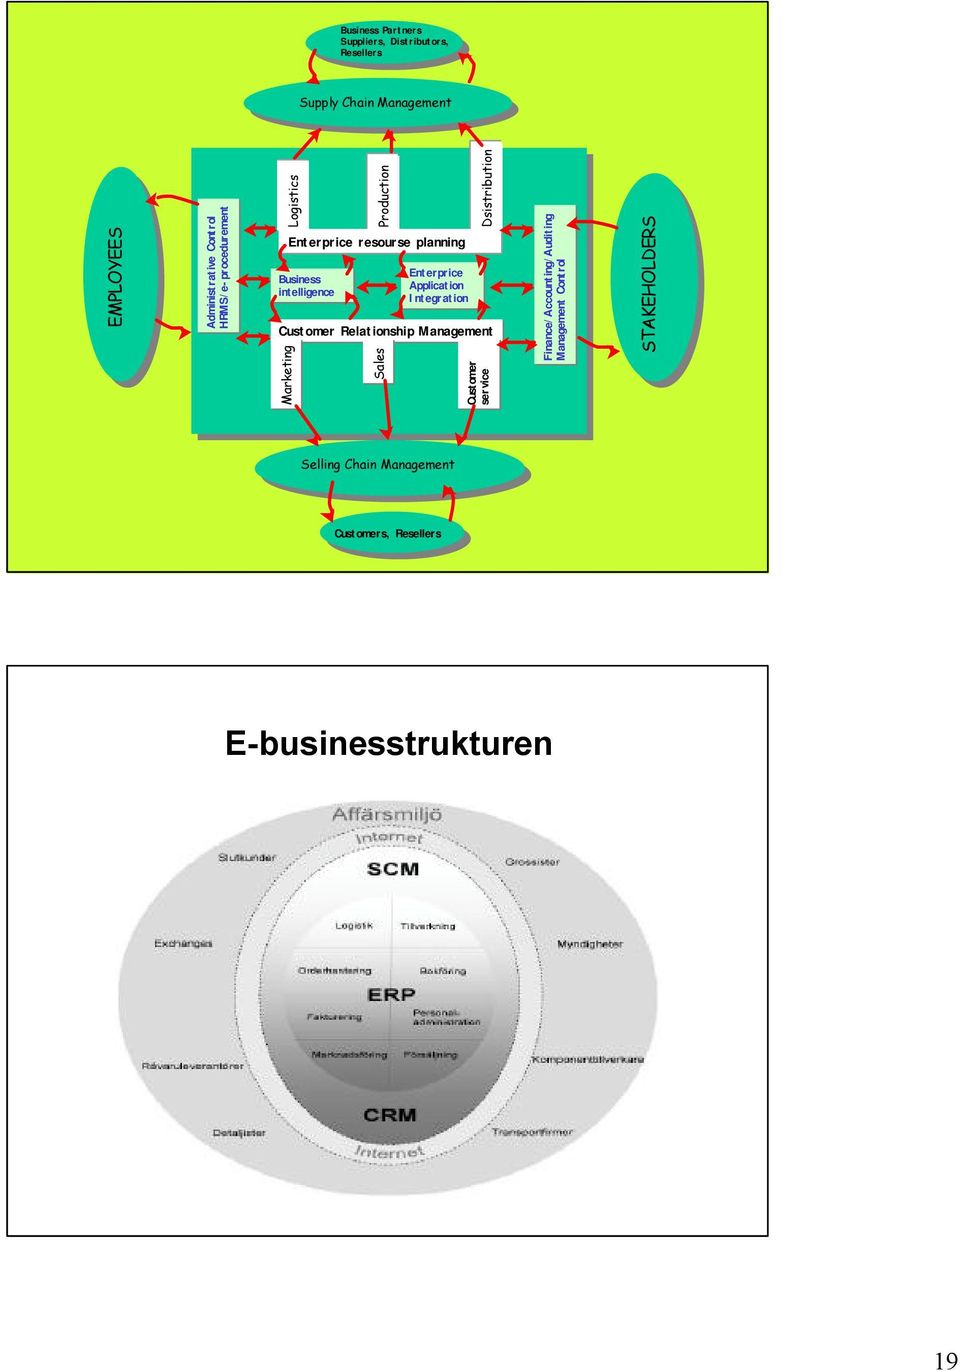 resourse planning Business intelligence Sales Enterprice Application Integration Dsistribution Customer service